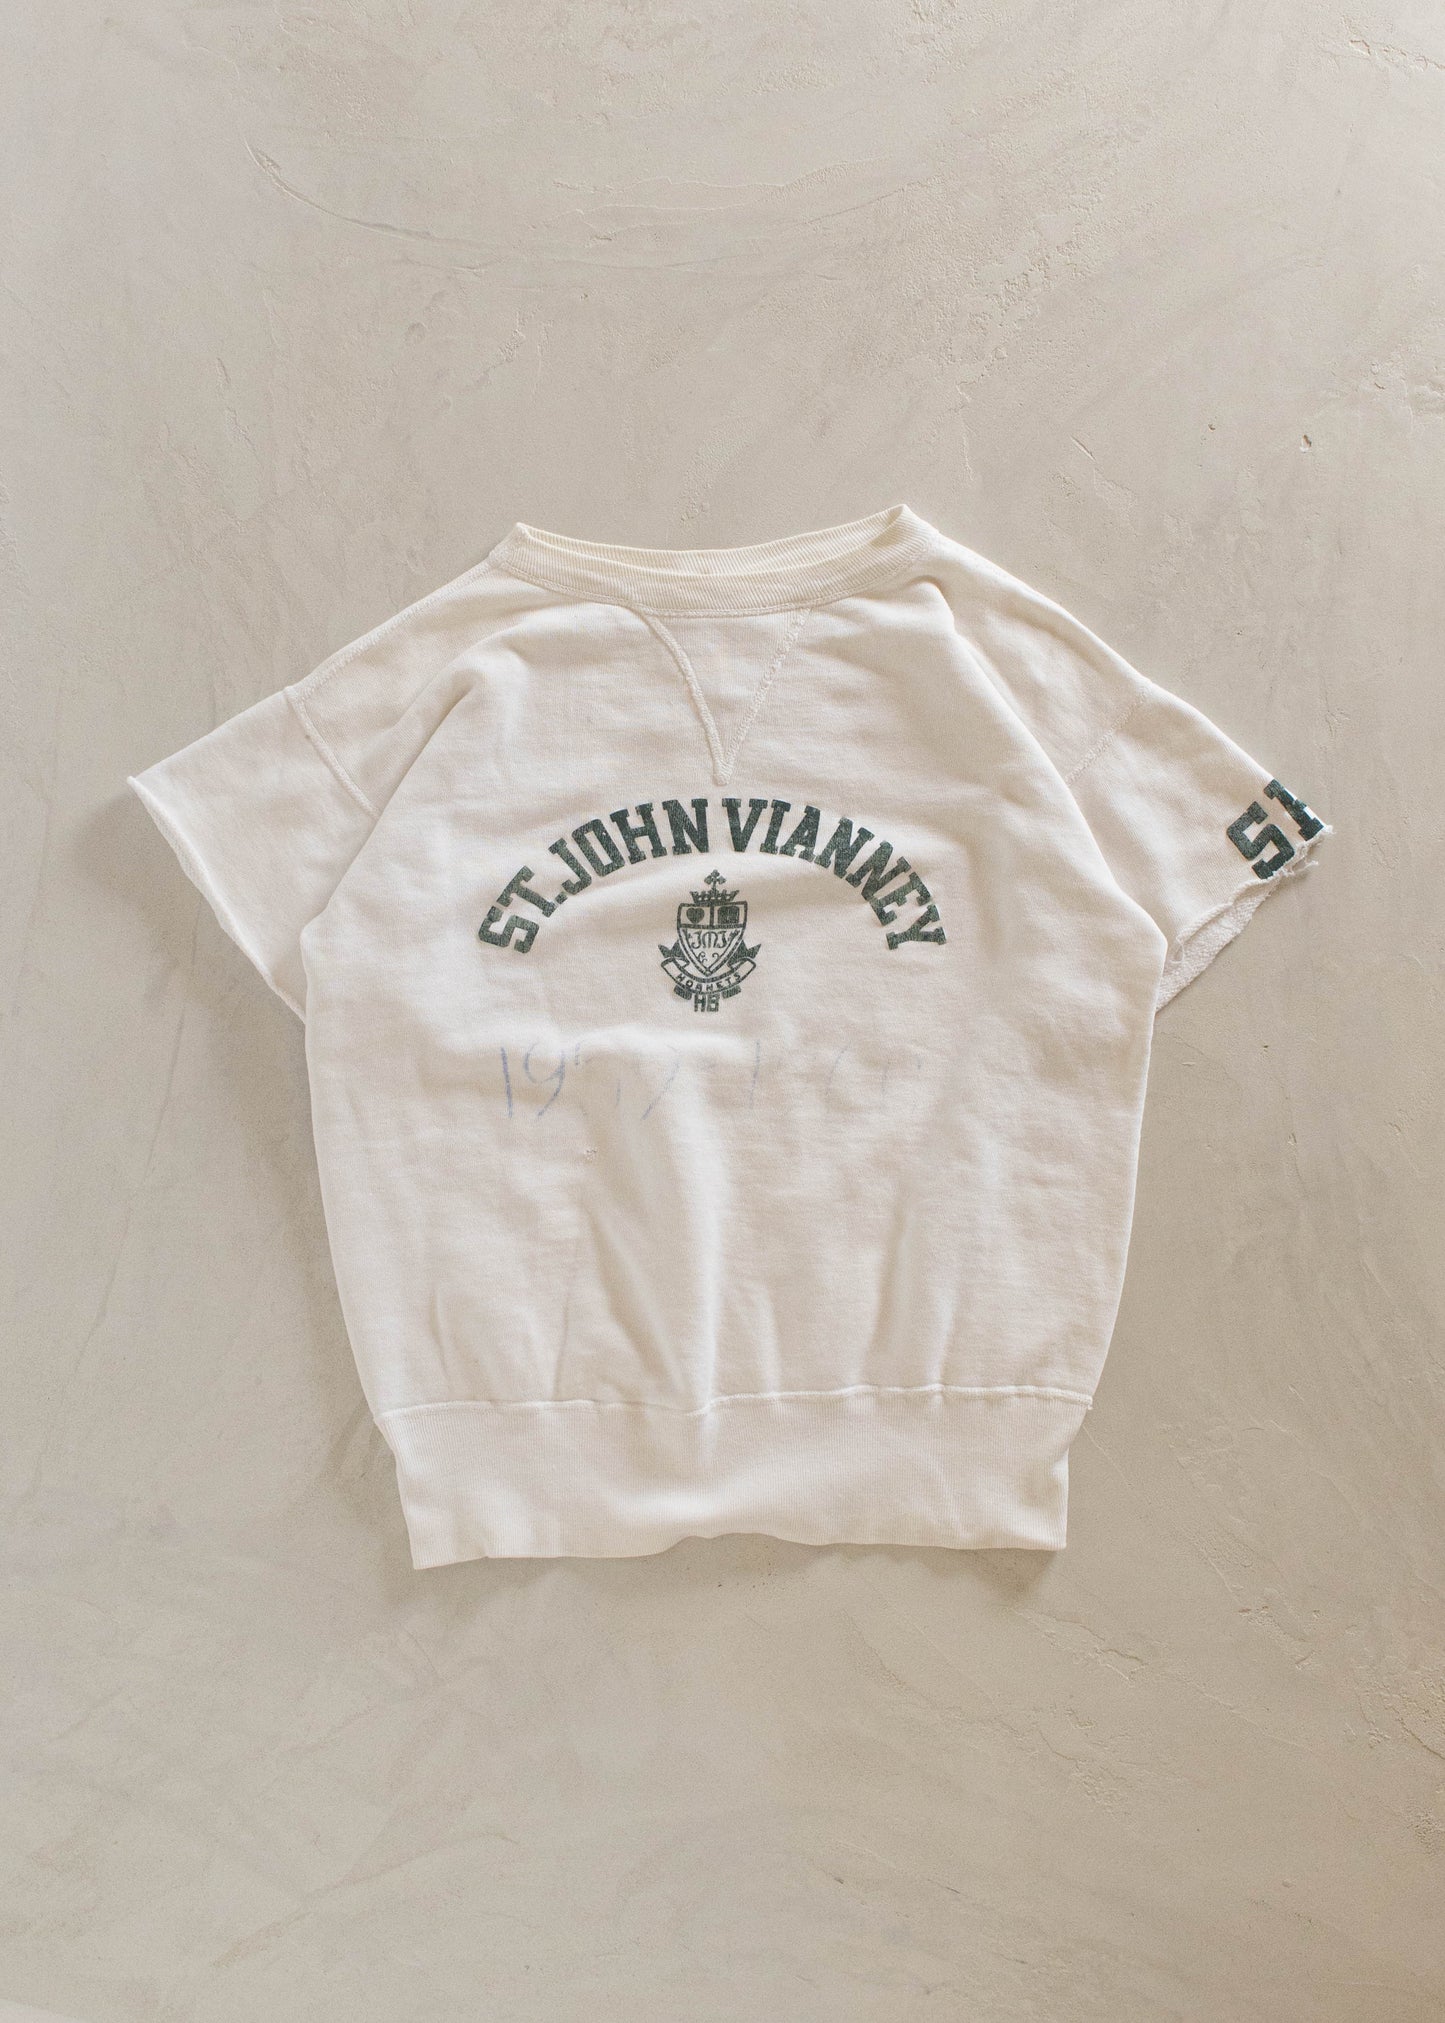 1950s St. John Vianney High Single V Short Sleeve Sweatshirt Size S/M